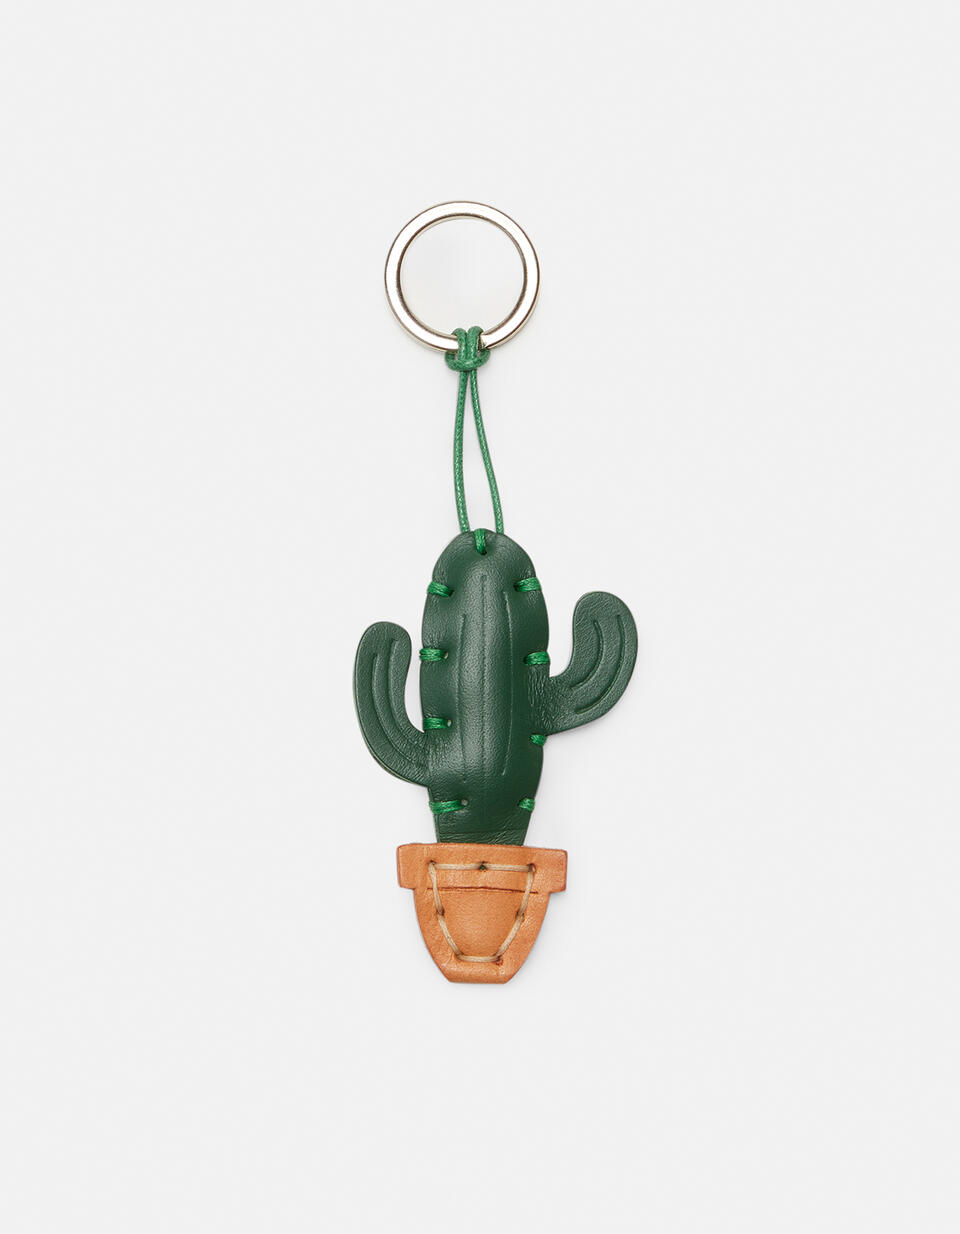 Cactus Leather key ring - Key holders - Women's Accessories | Accessories VERDE - Key holders - Women's Accessories | AccessoriesCuoieria Fiorentina